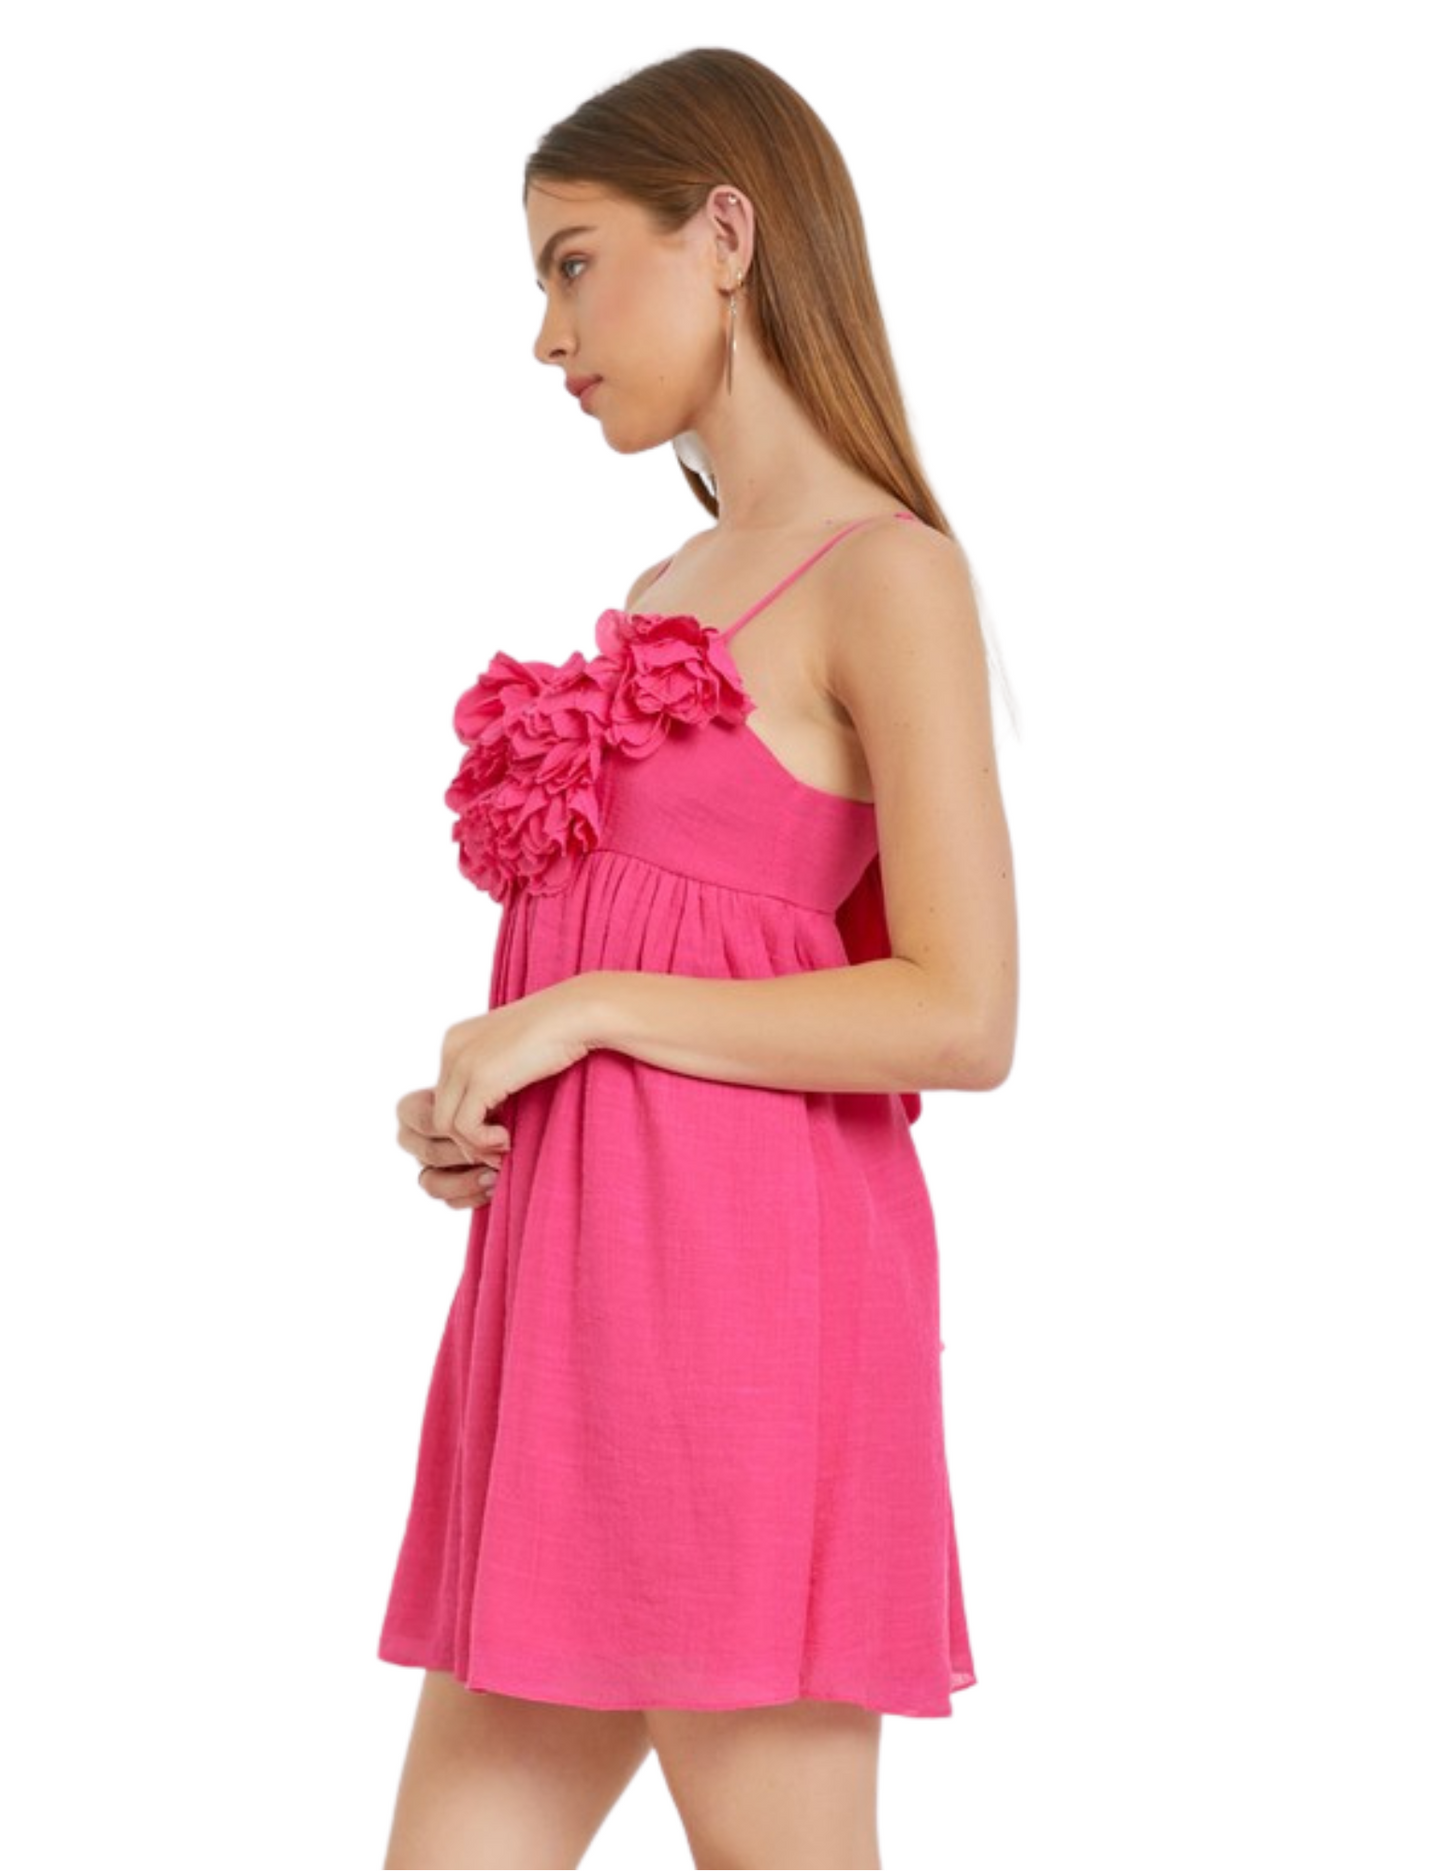 Rose Dreams Mini Dress - hot pink new